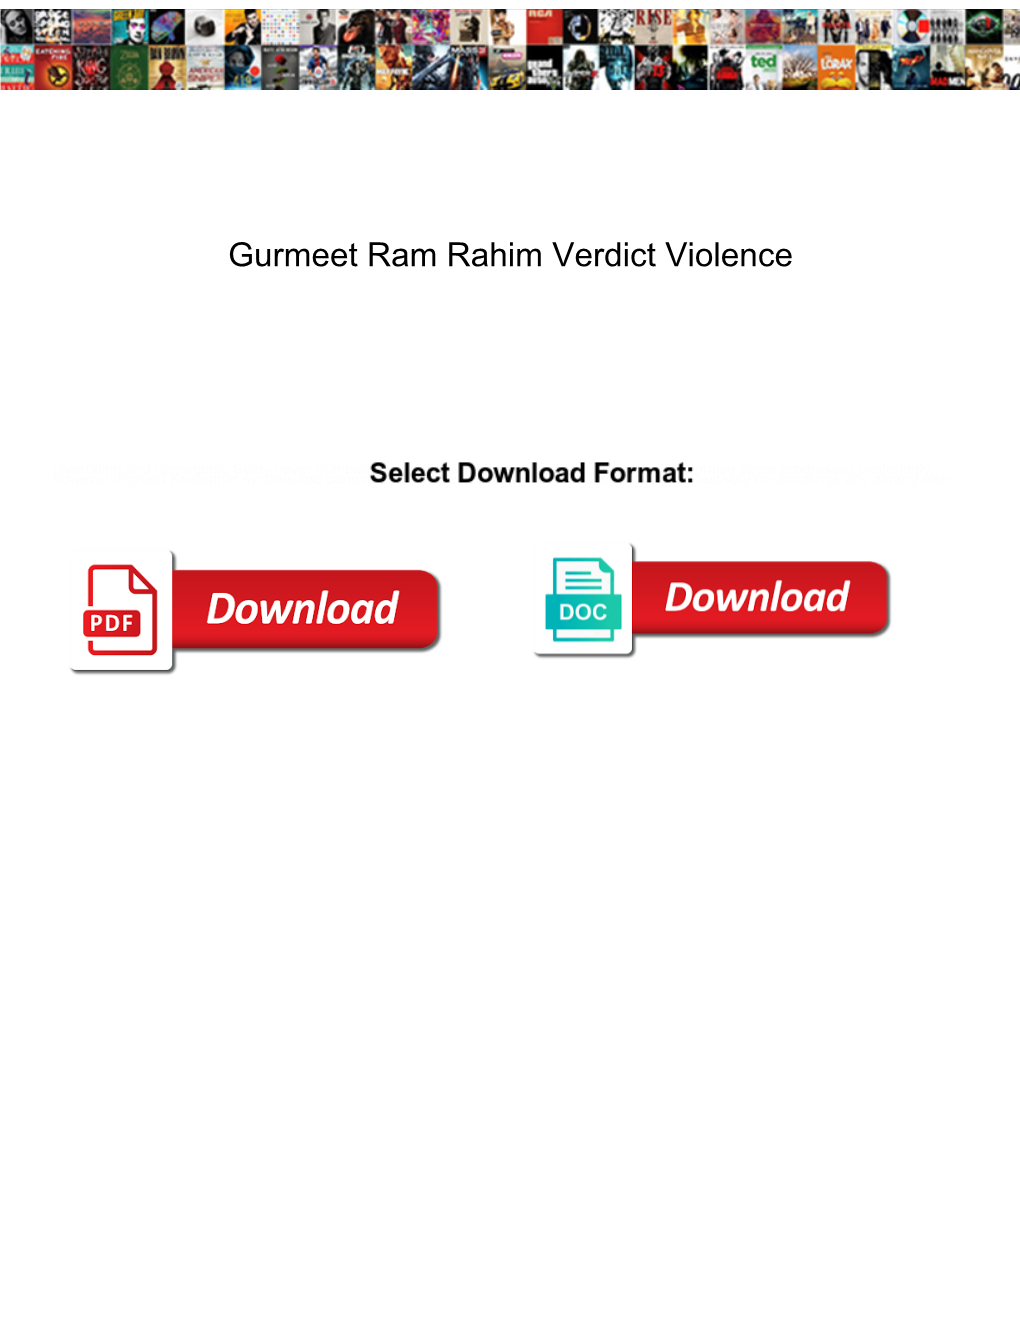 Gurmeet Ram Rahim Verdict Violence